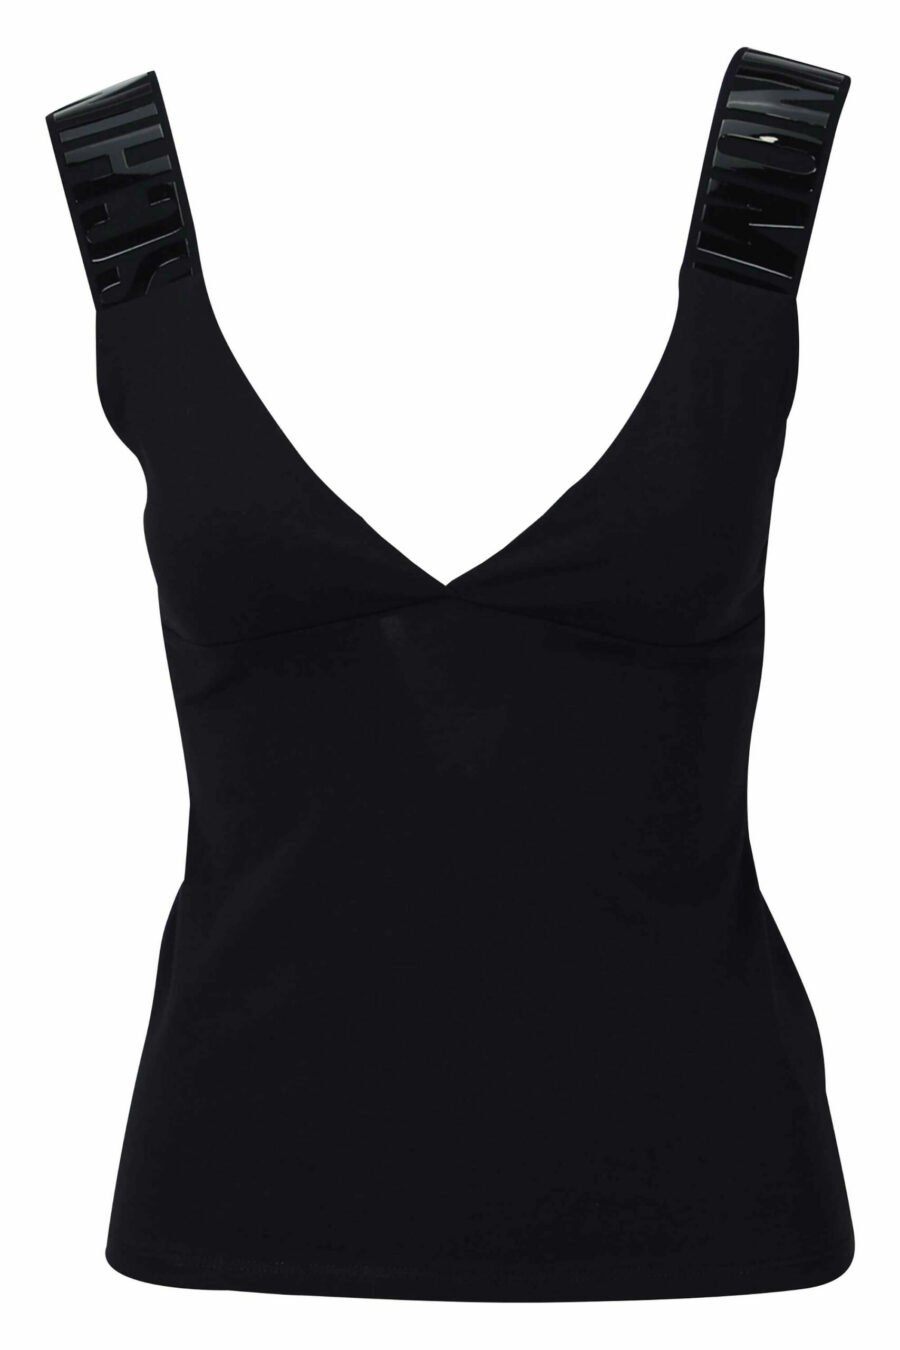 Black sleeveless T-shirt with monochrome striped logo - 889316615043 1 scaled